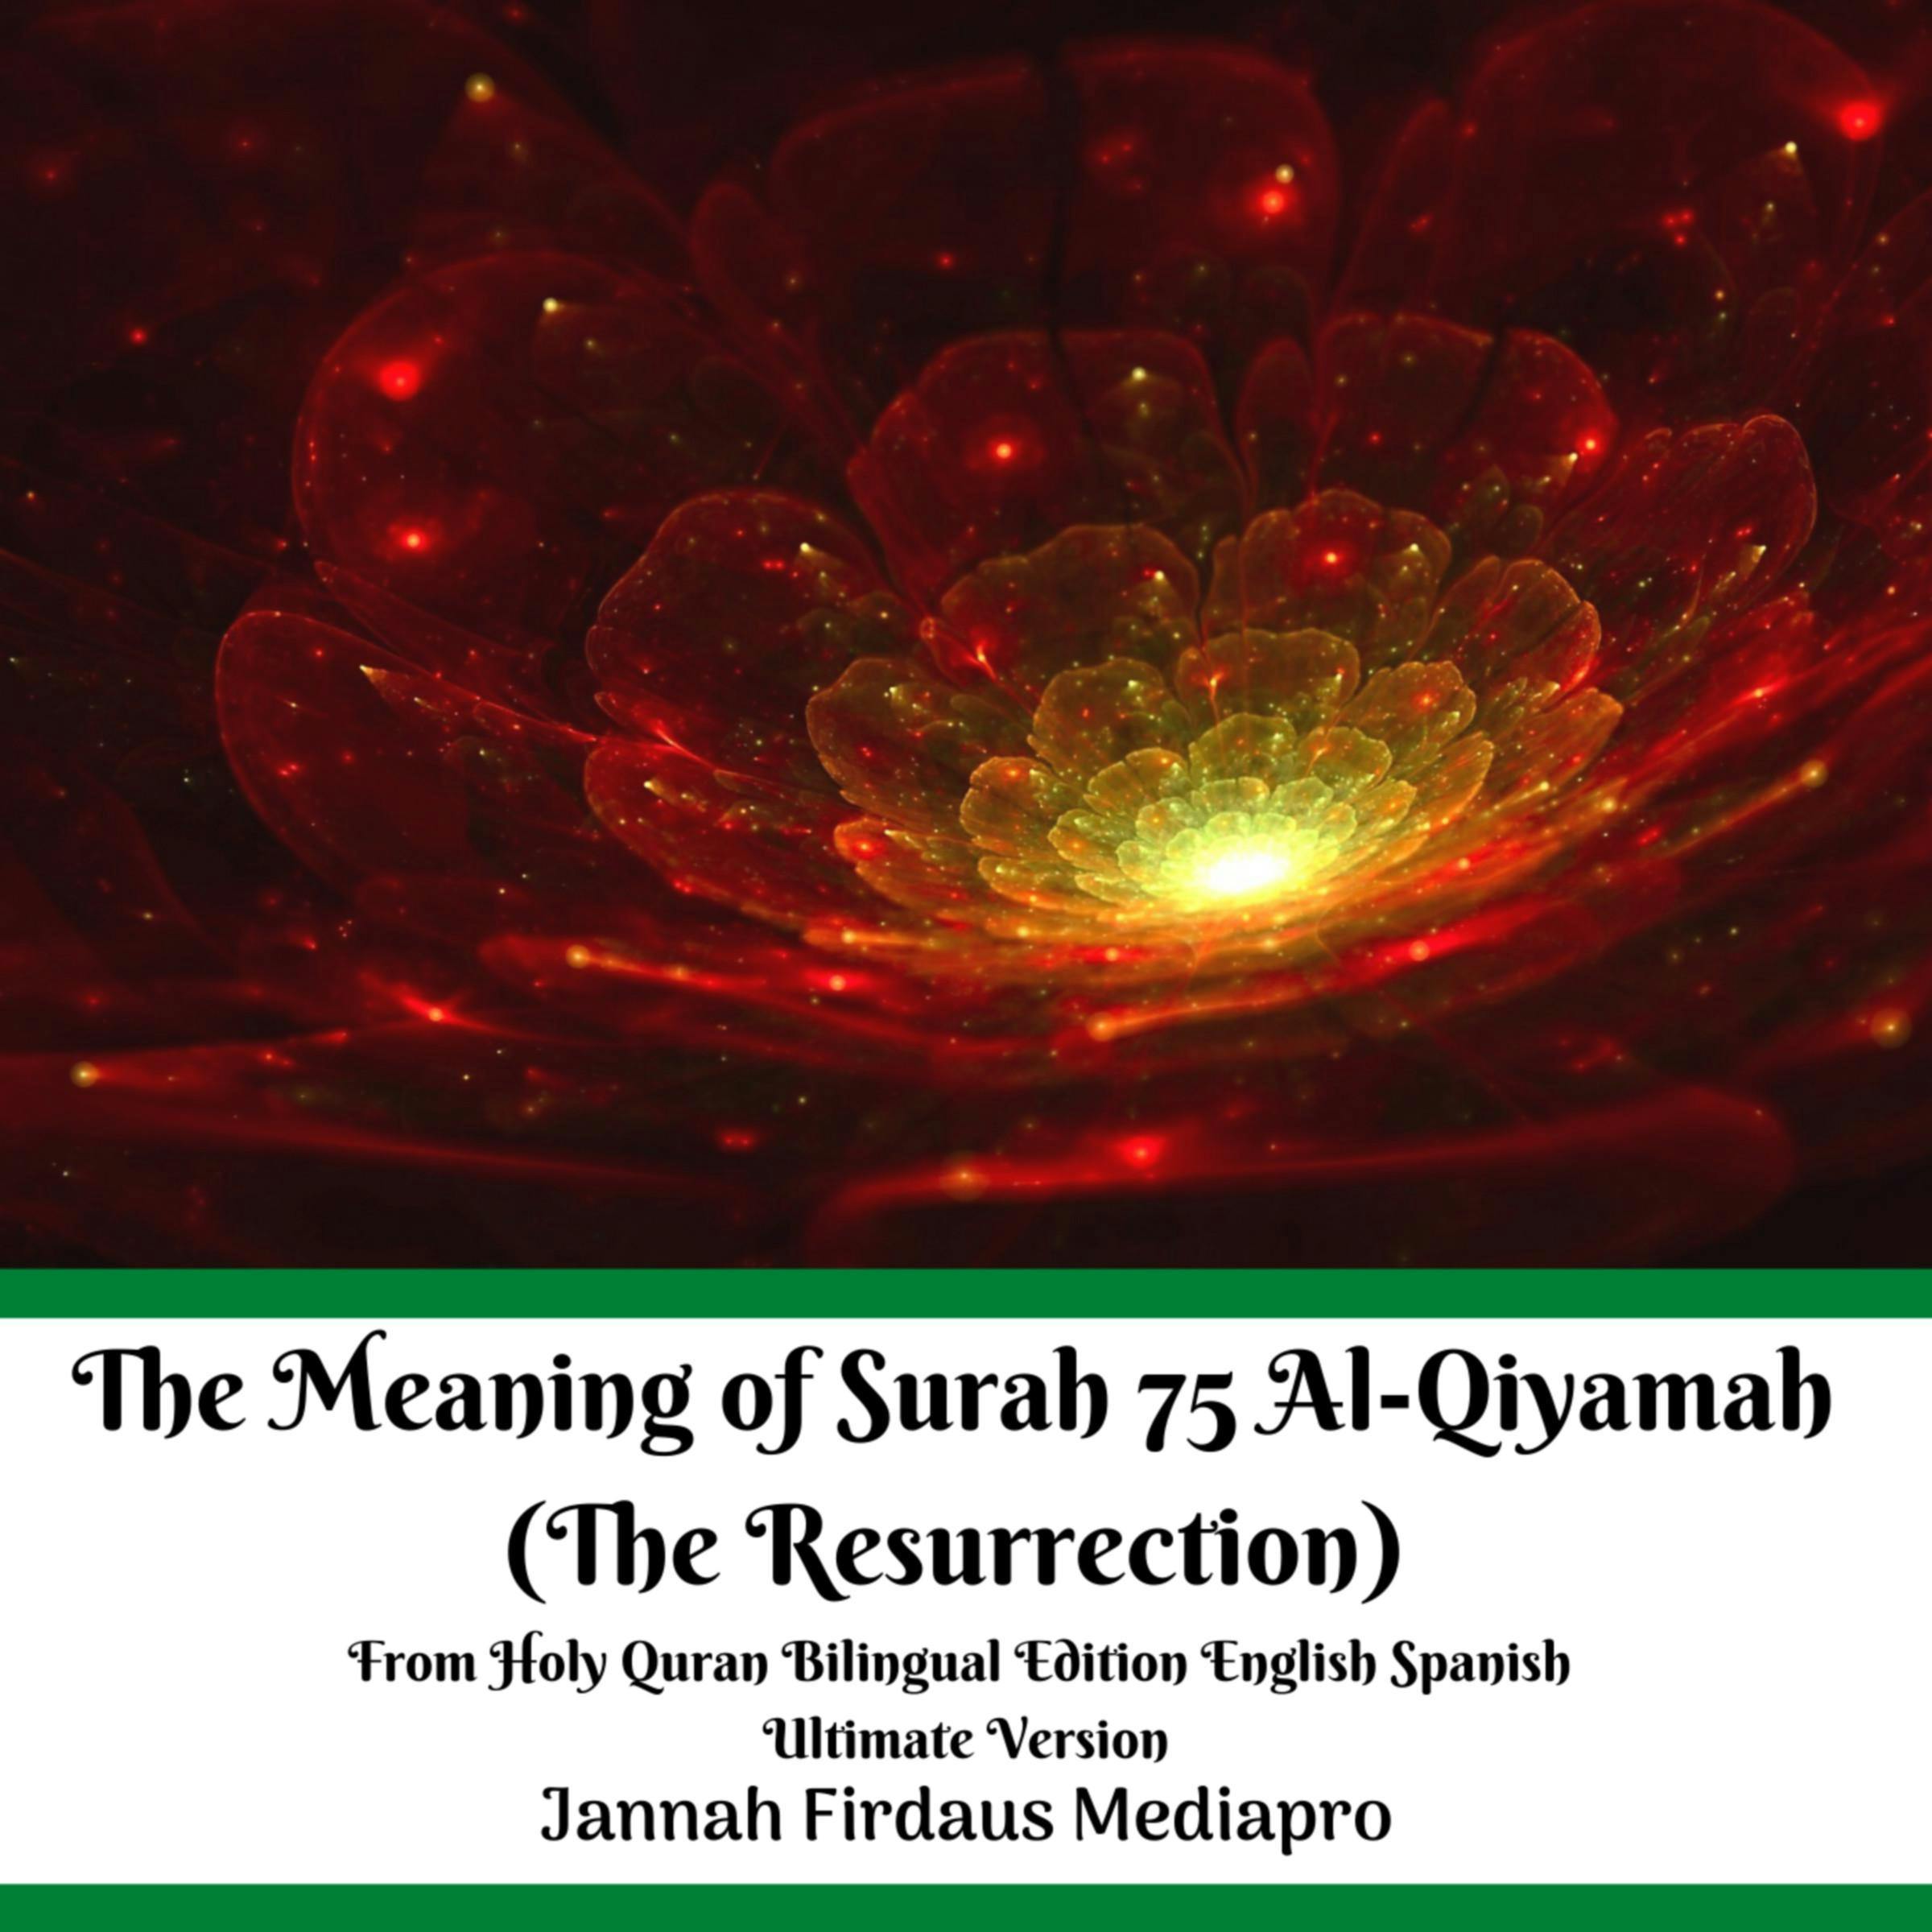 The Meaning of Surah 75 Al-Qiyamah (The Resurrection): From Holy Quran Bilingual Edition English Spanish Ultimate Version - Jannah Firdaus Mediapro